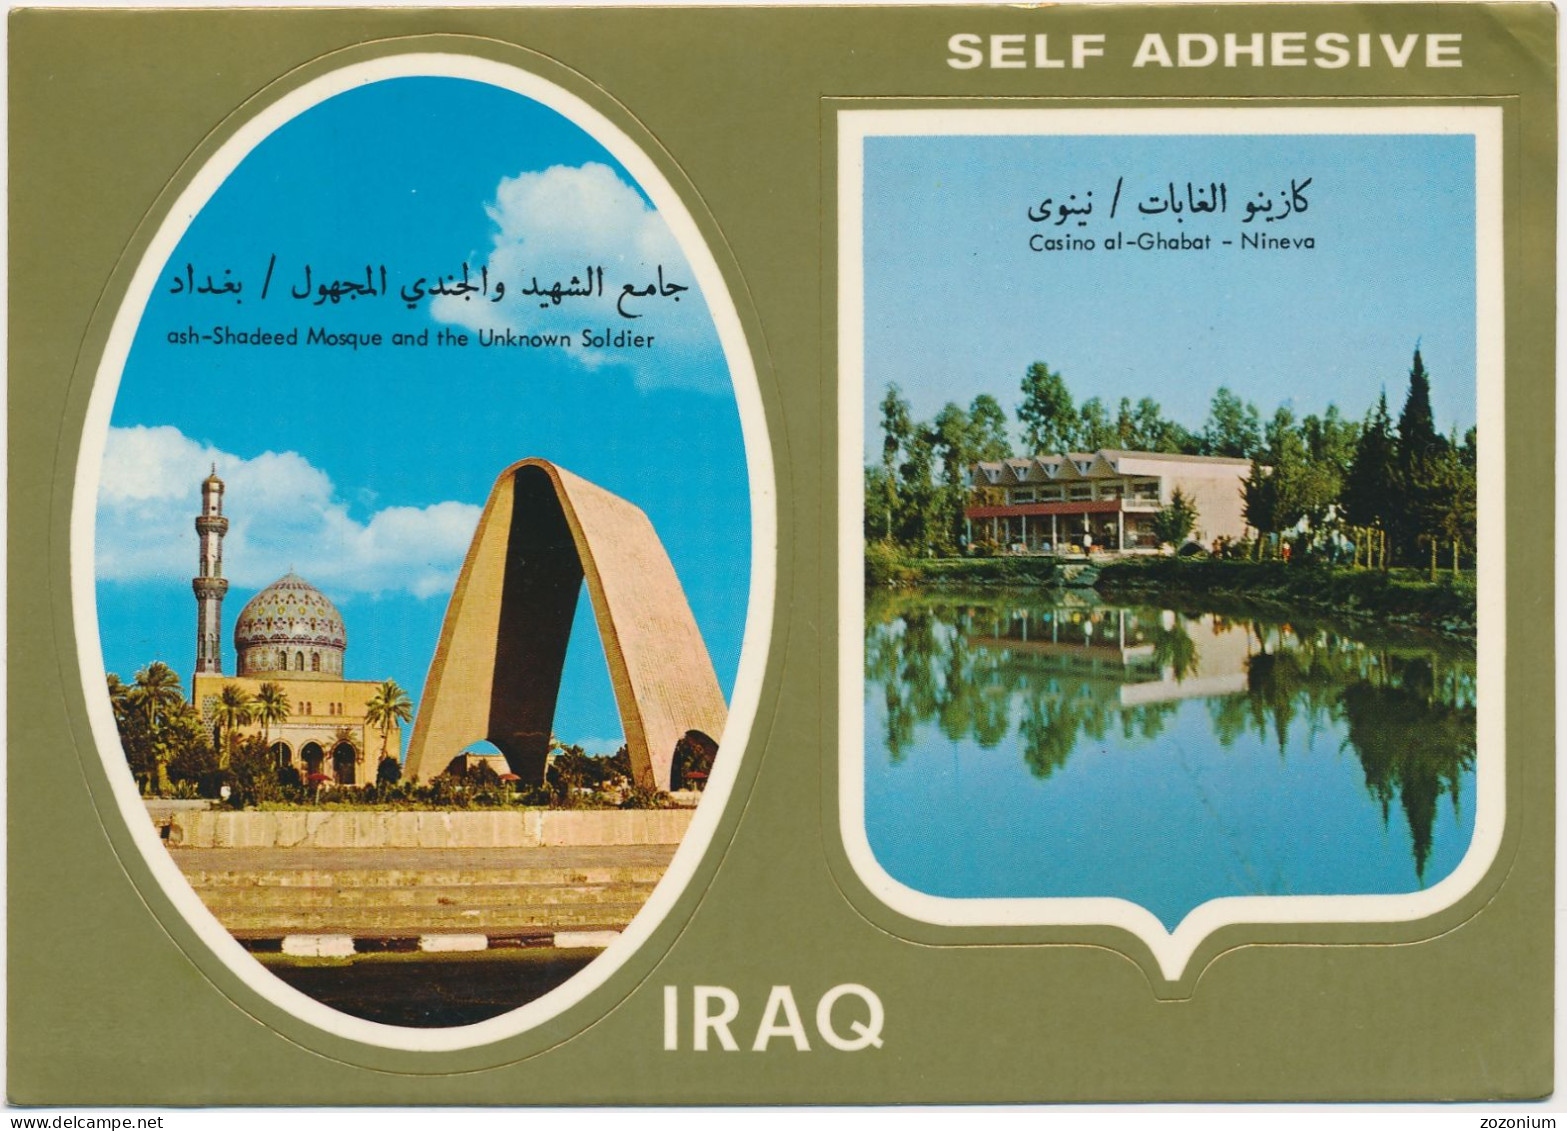 IRAQ  Baghdad Mosque Unknone Soldier - 1982 Stamp, Nineva Stickers, Label, Vintage Photo Postcard Rppc Pc - Iraq